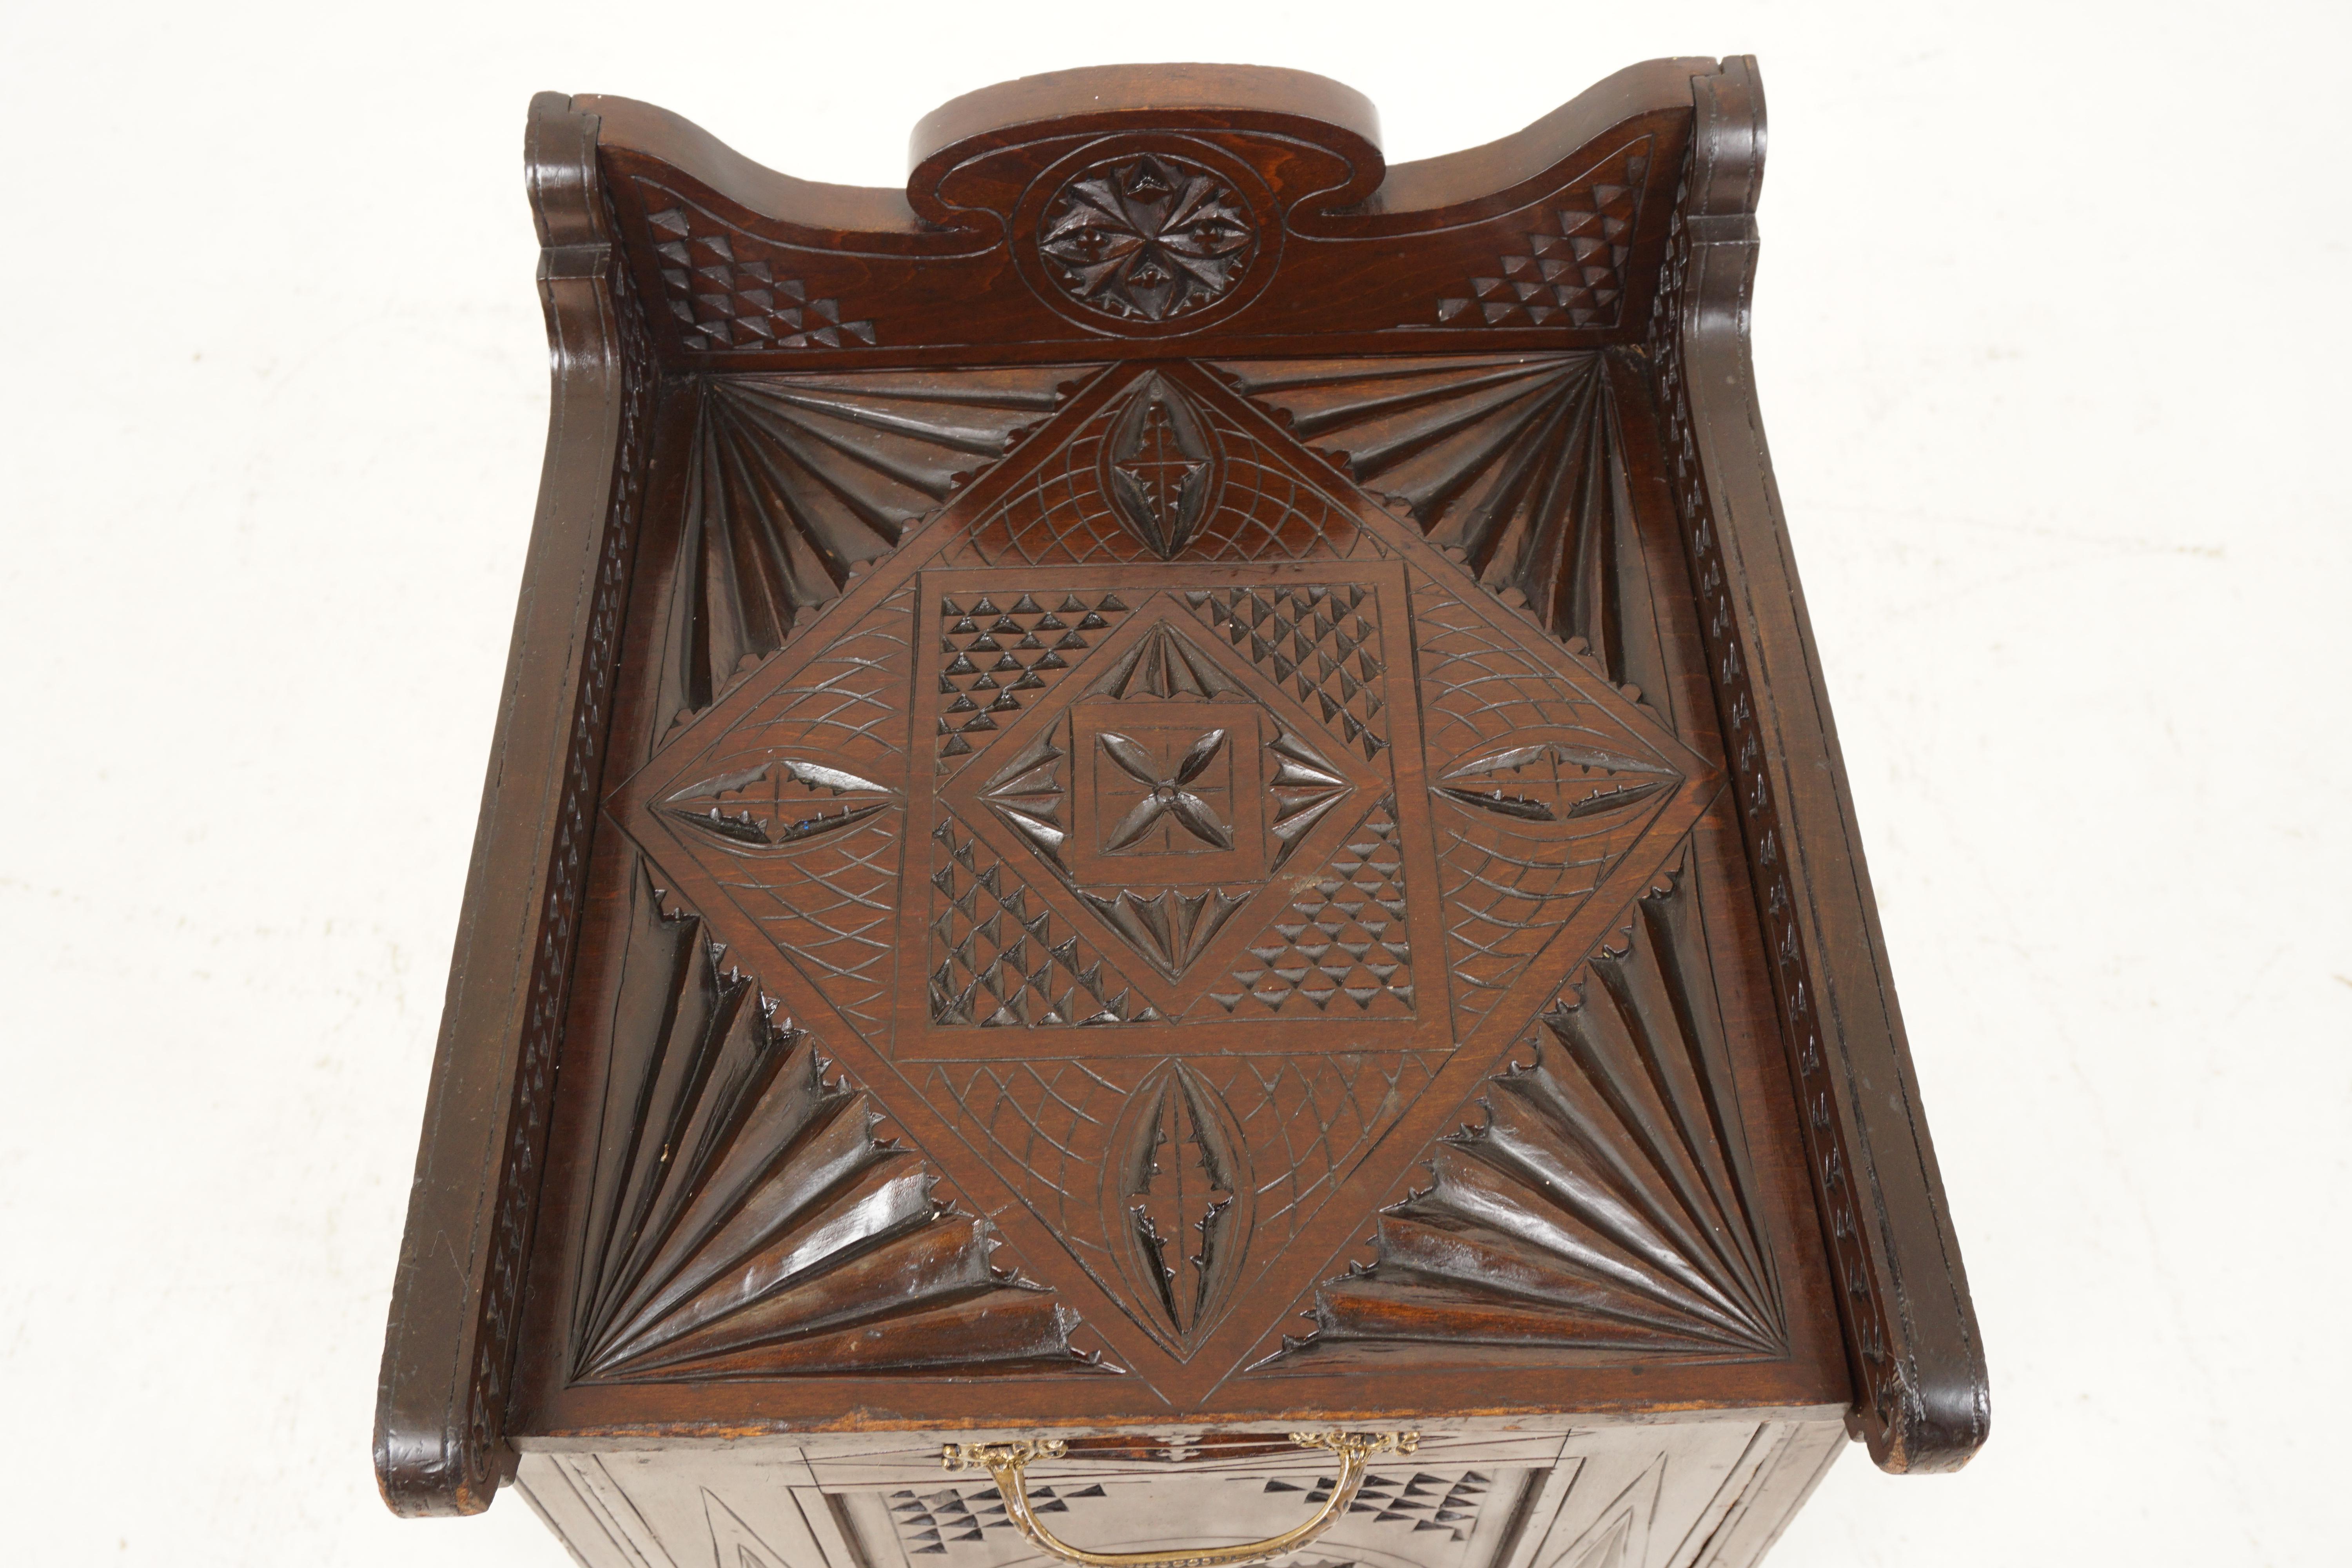 Scottish Antique Chipped Carved Coal Box, Scuttle Box, Purdonium, Scotland 1880, H268 For Sale